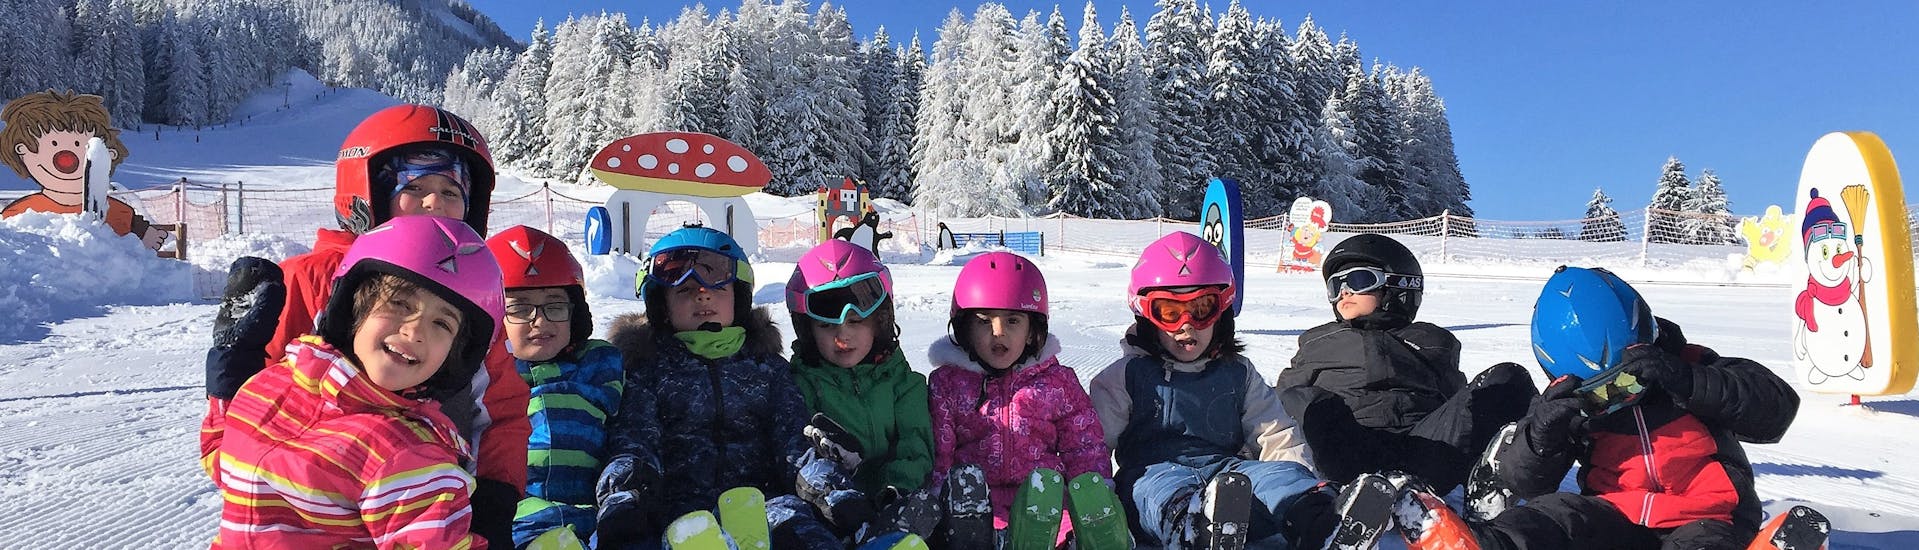 Kids sitting on the snow during Ski Lessons "Junior Club" with Ski School Dobbiaco